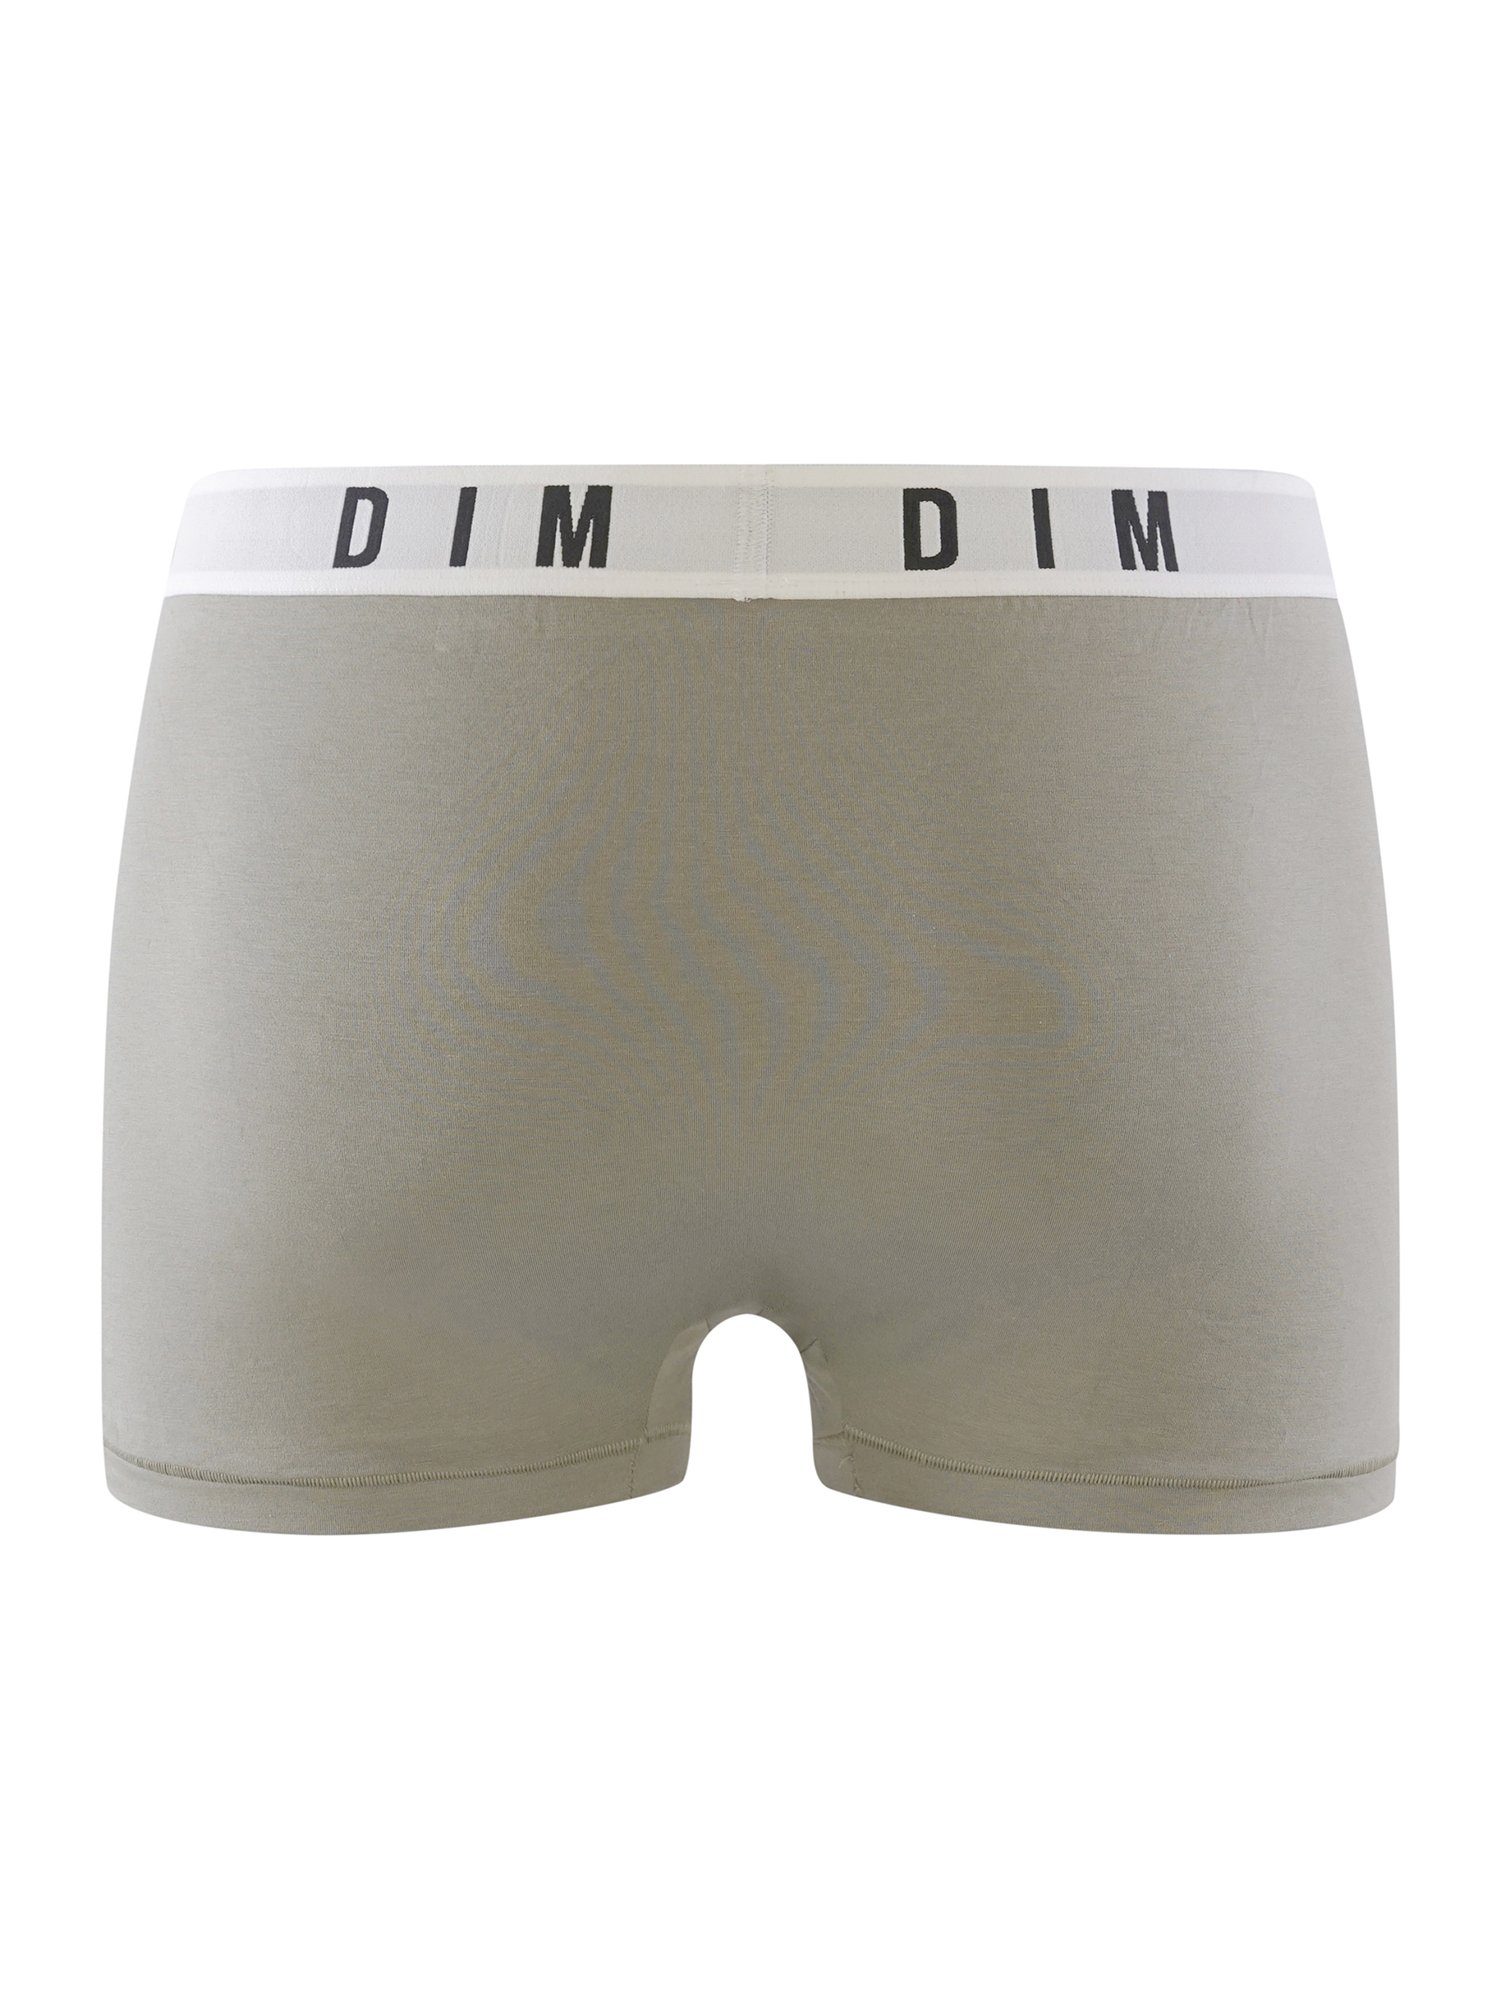 DIM Boxer Shorts (2-St) camouflage